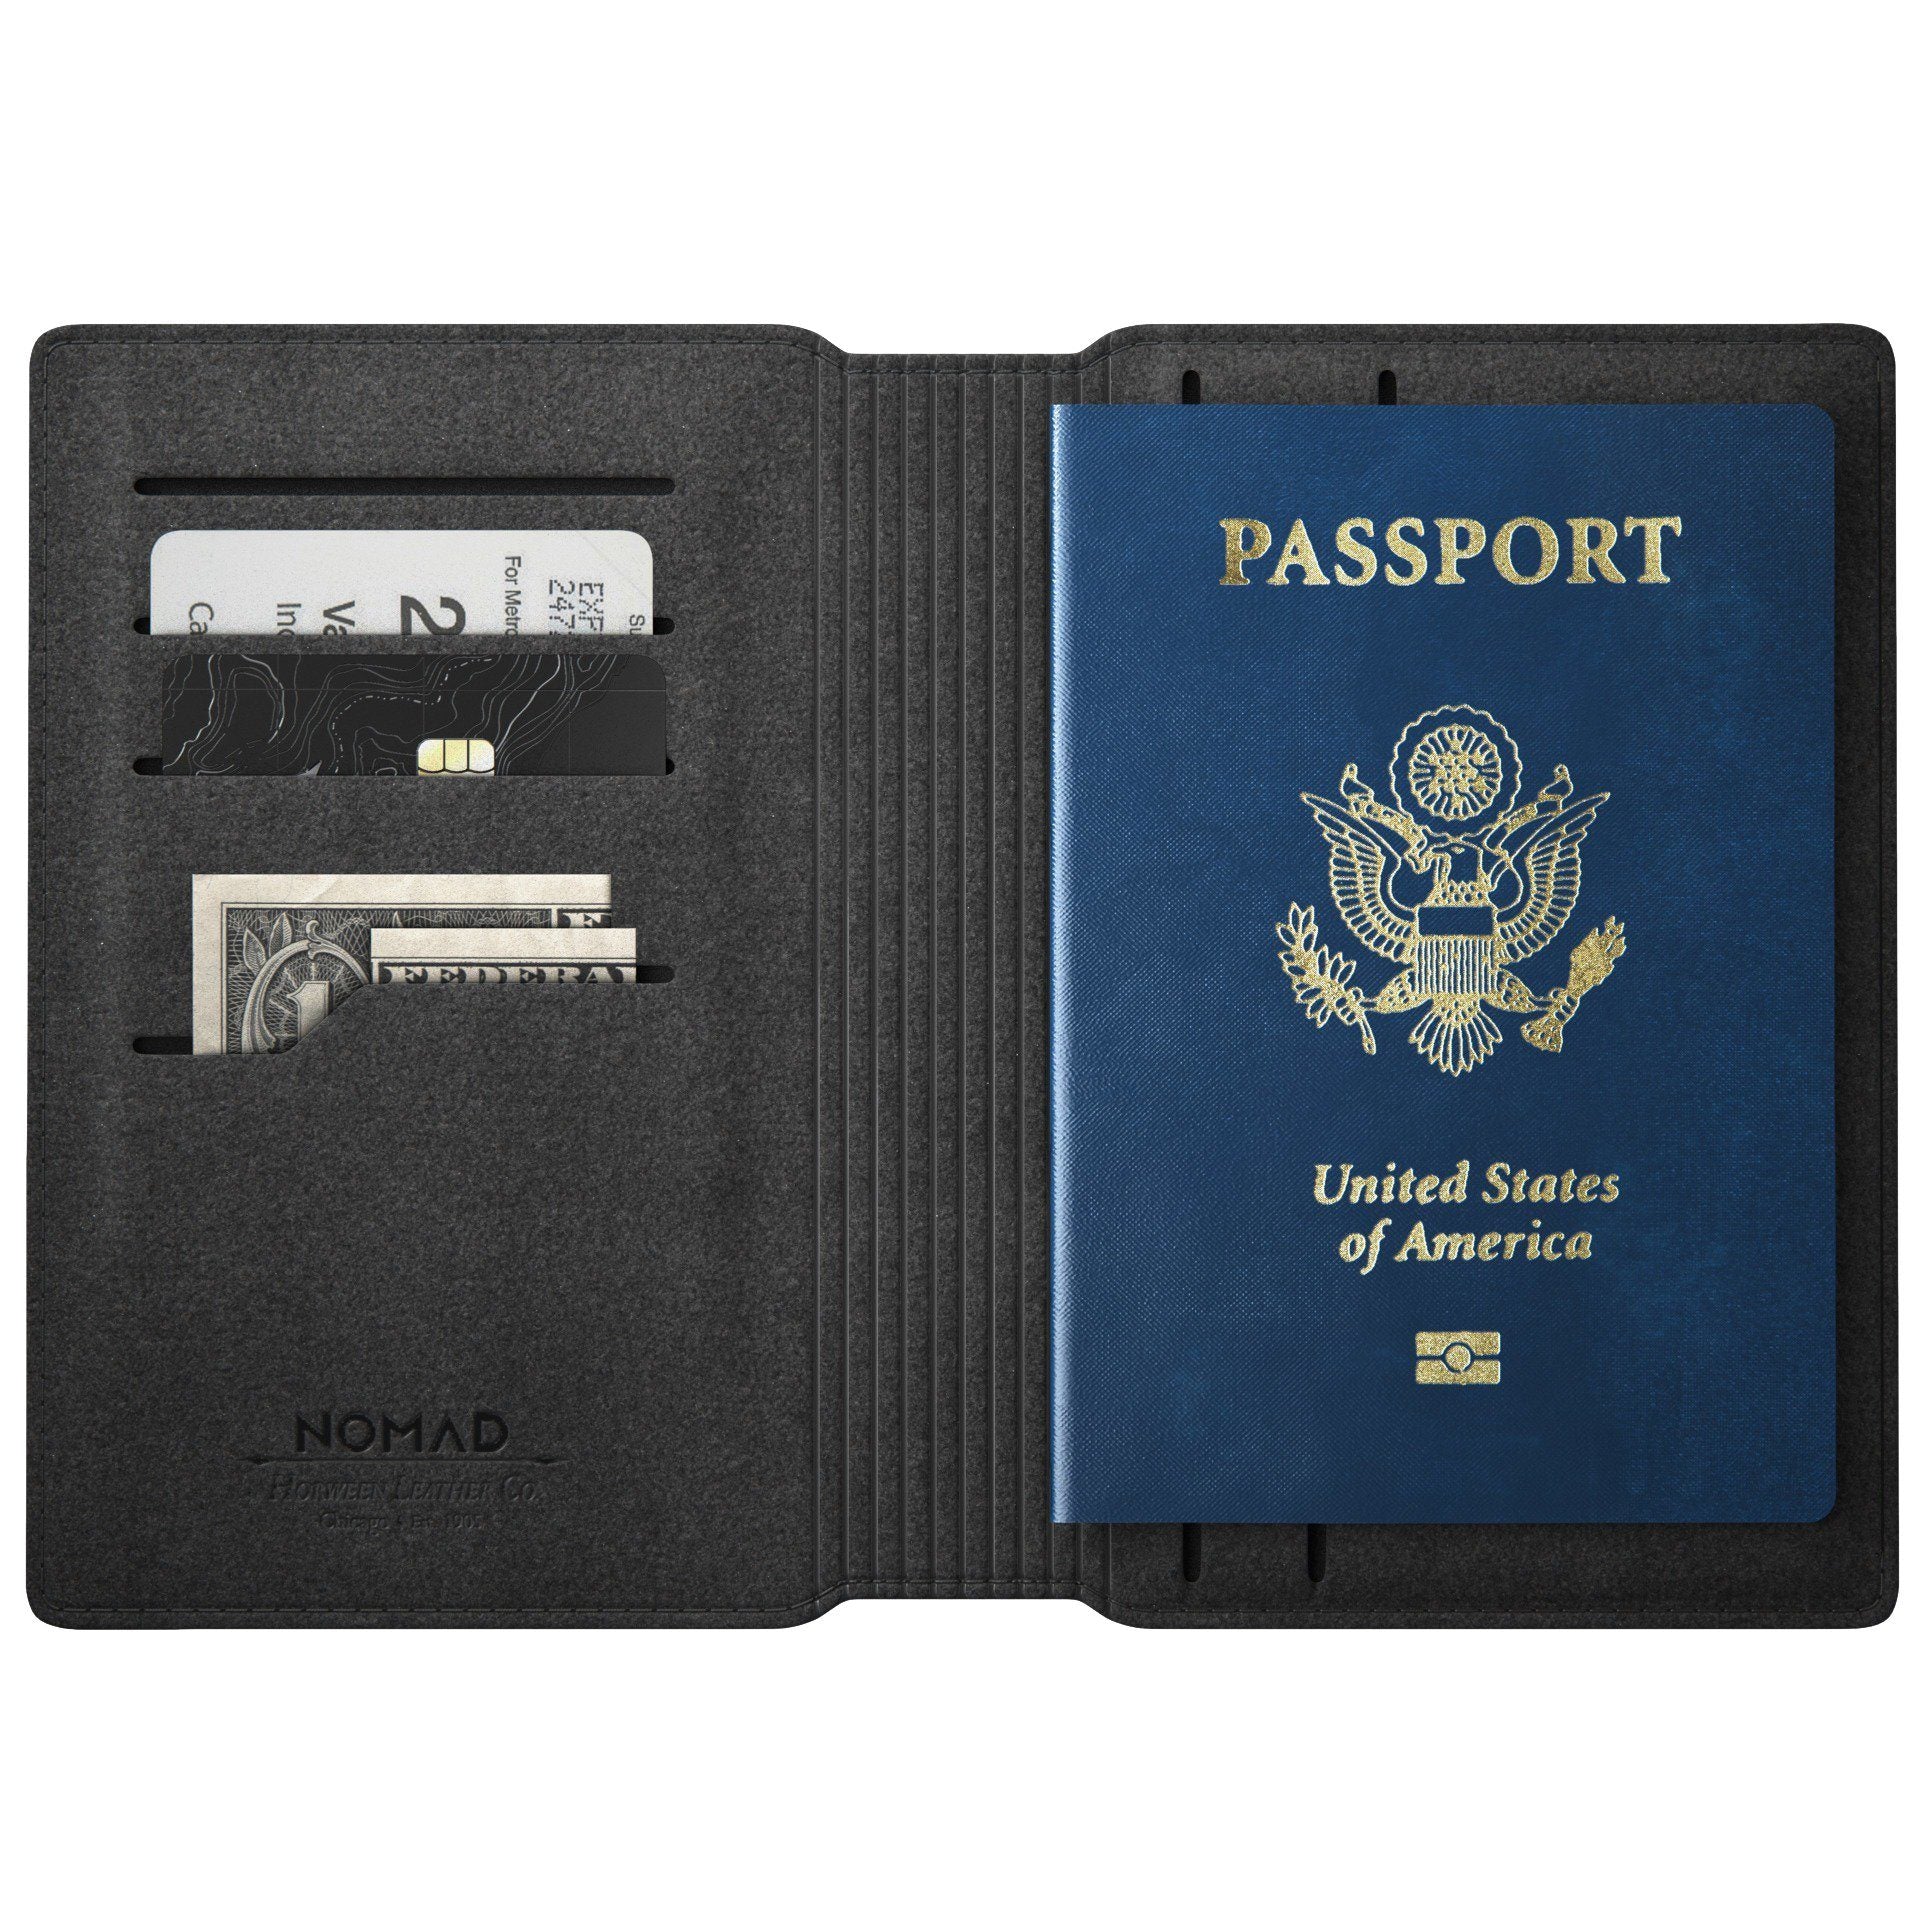 NOMAD Passport Wallet, Brown Wallet NOMAD 